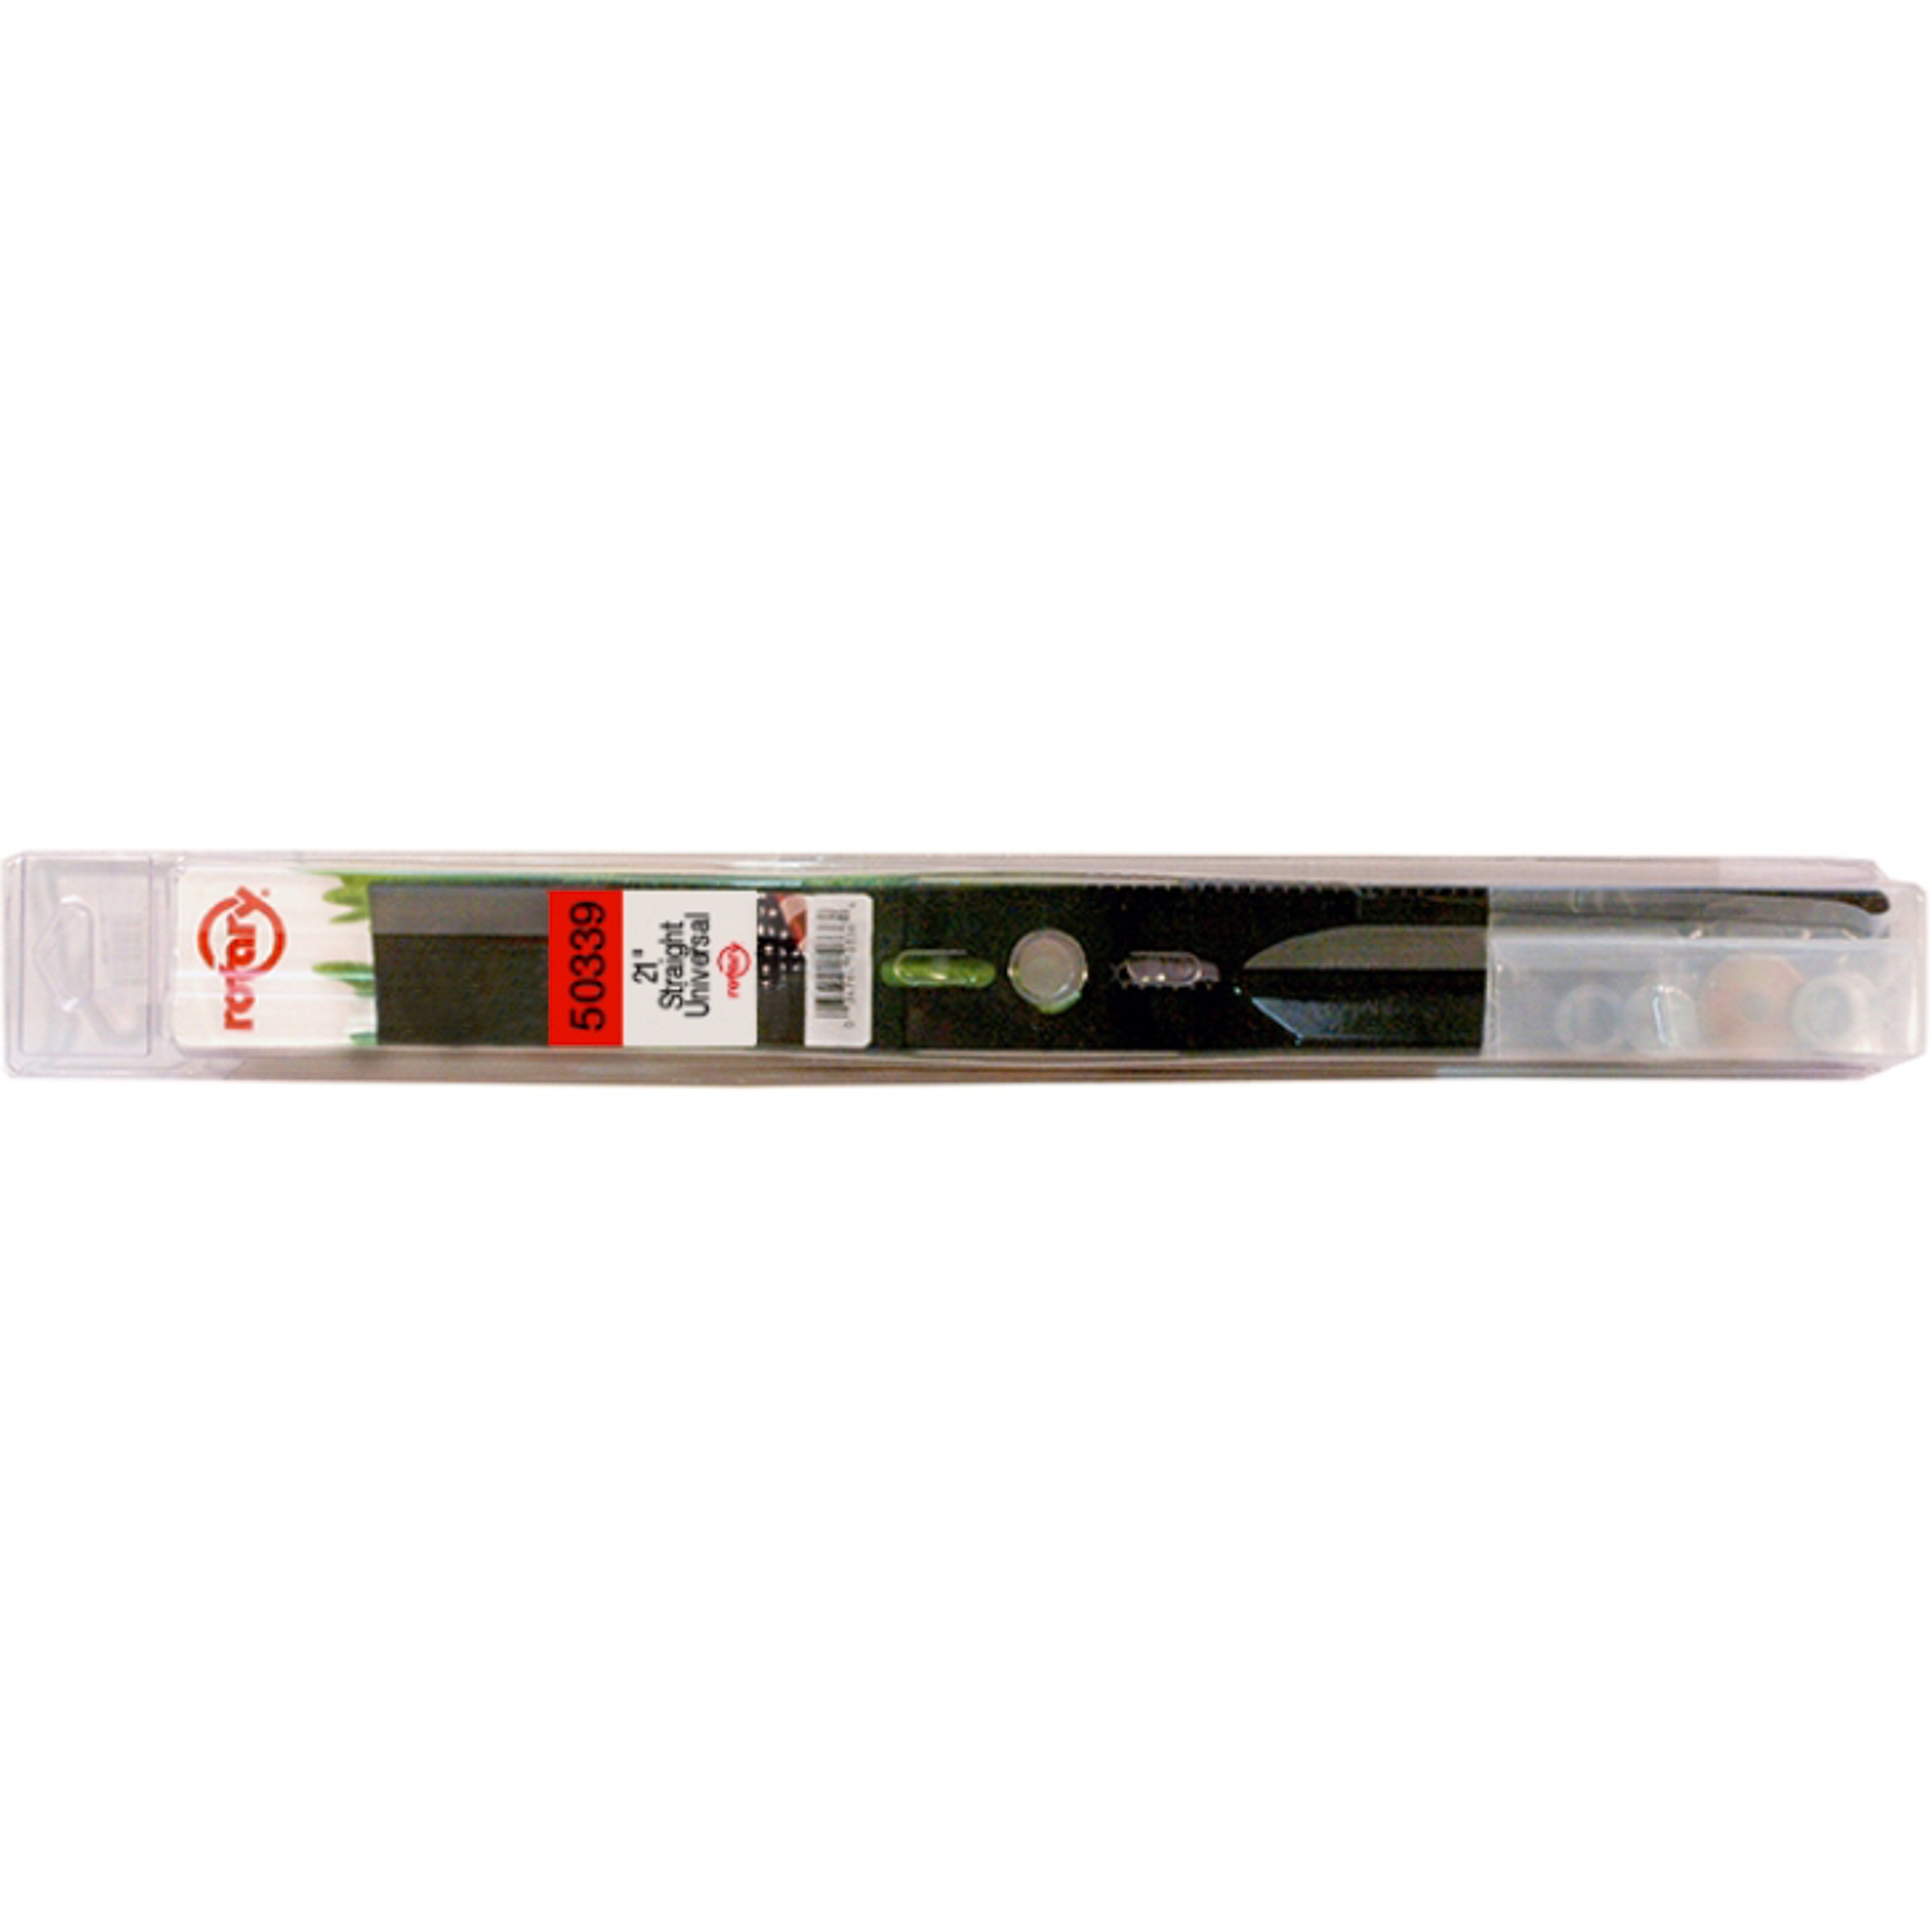 Нож для газонокосилки Rotary HG RT14-50339 в блистере